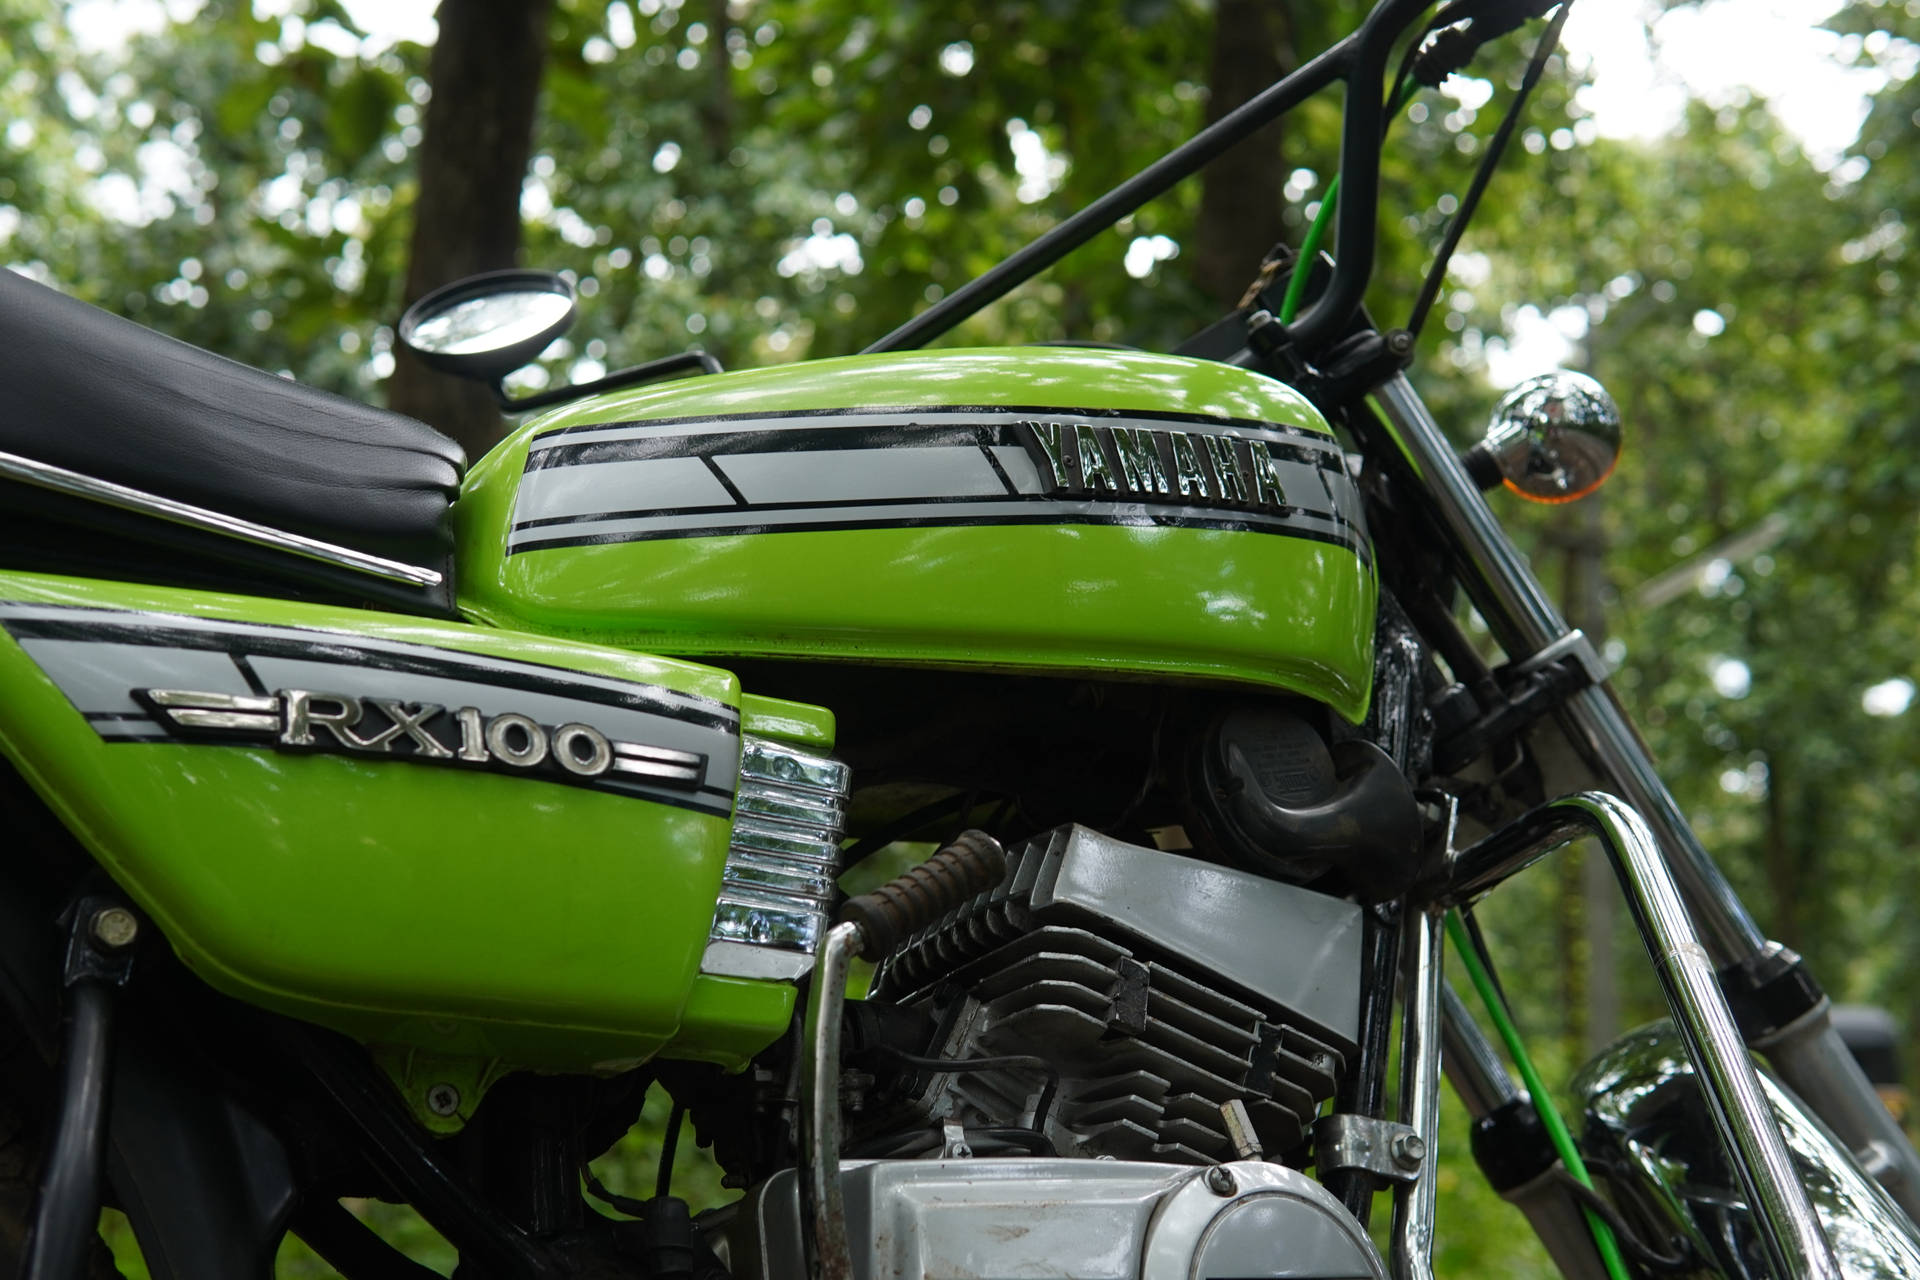 Neon Green Yamaha Rx100 Motorcycle Wallpaper